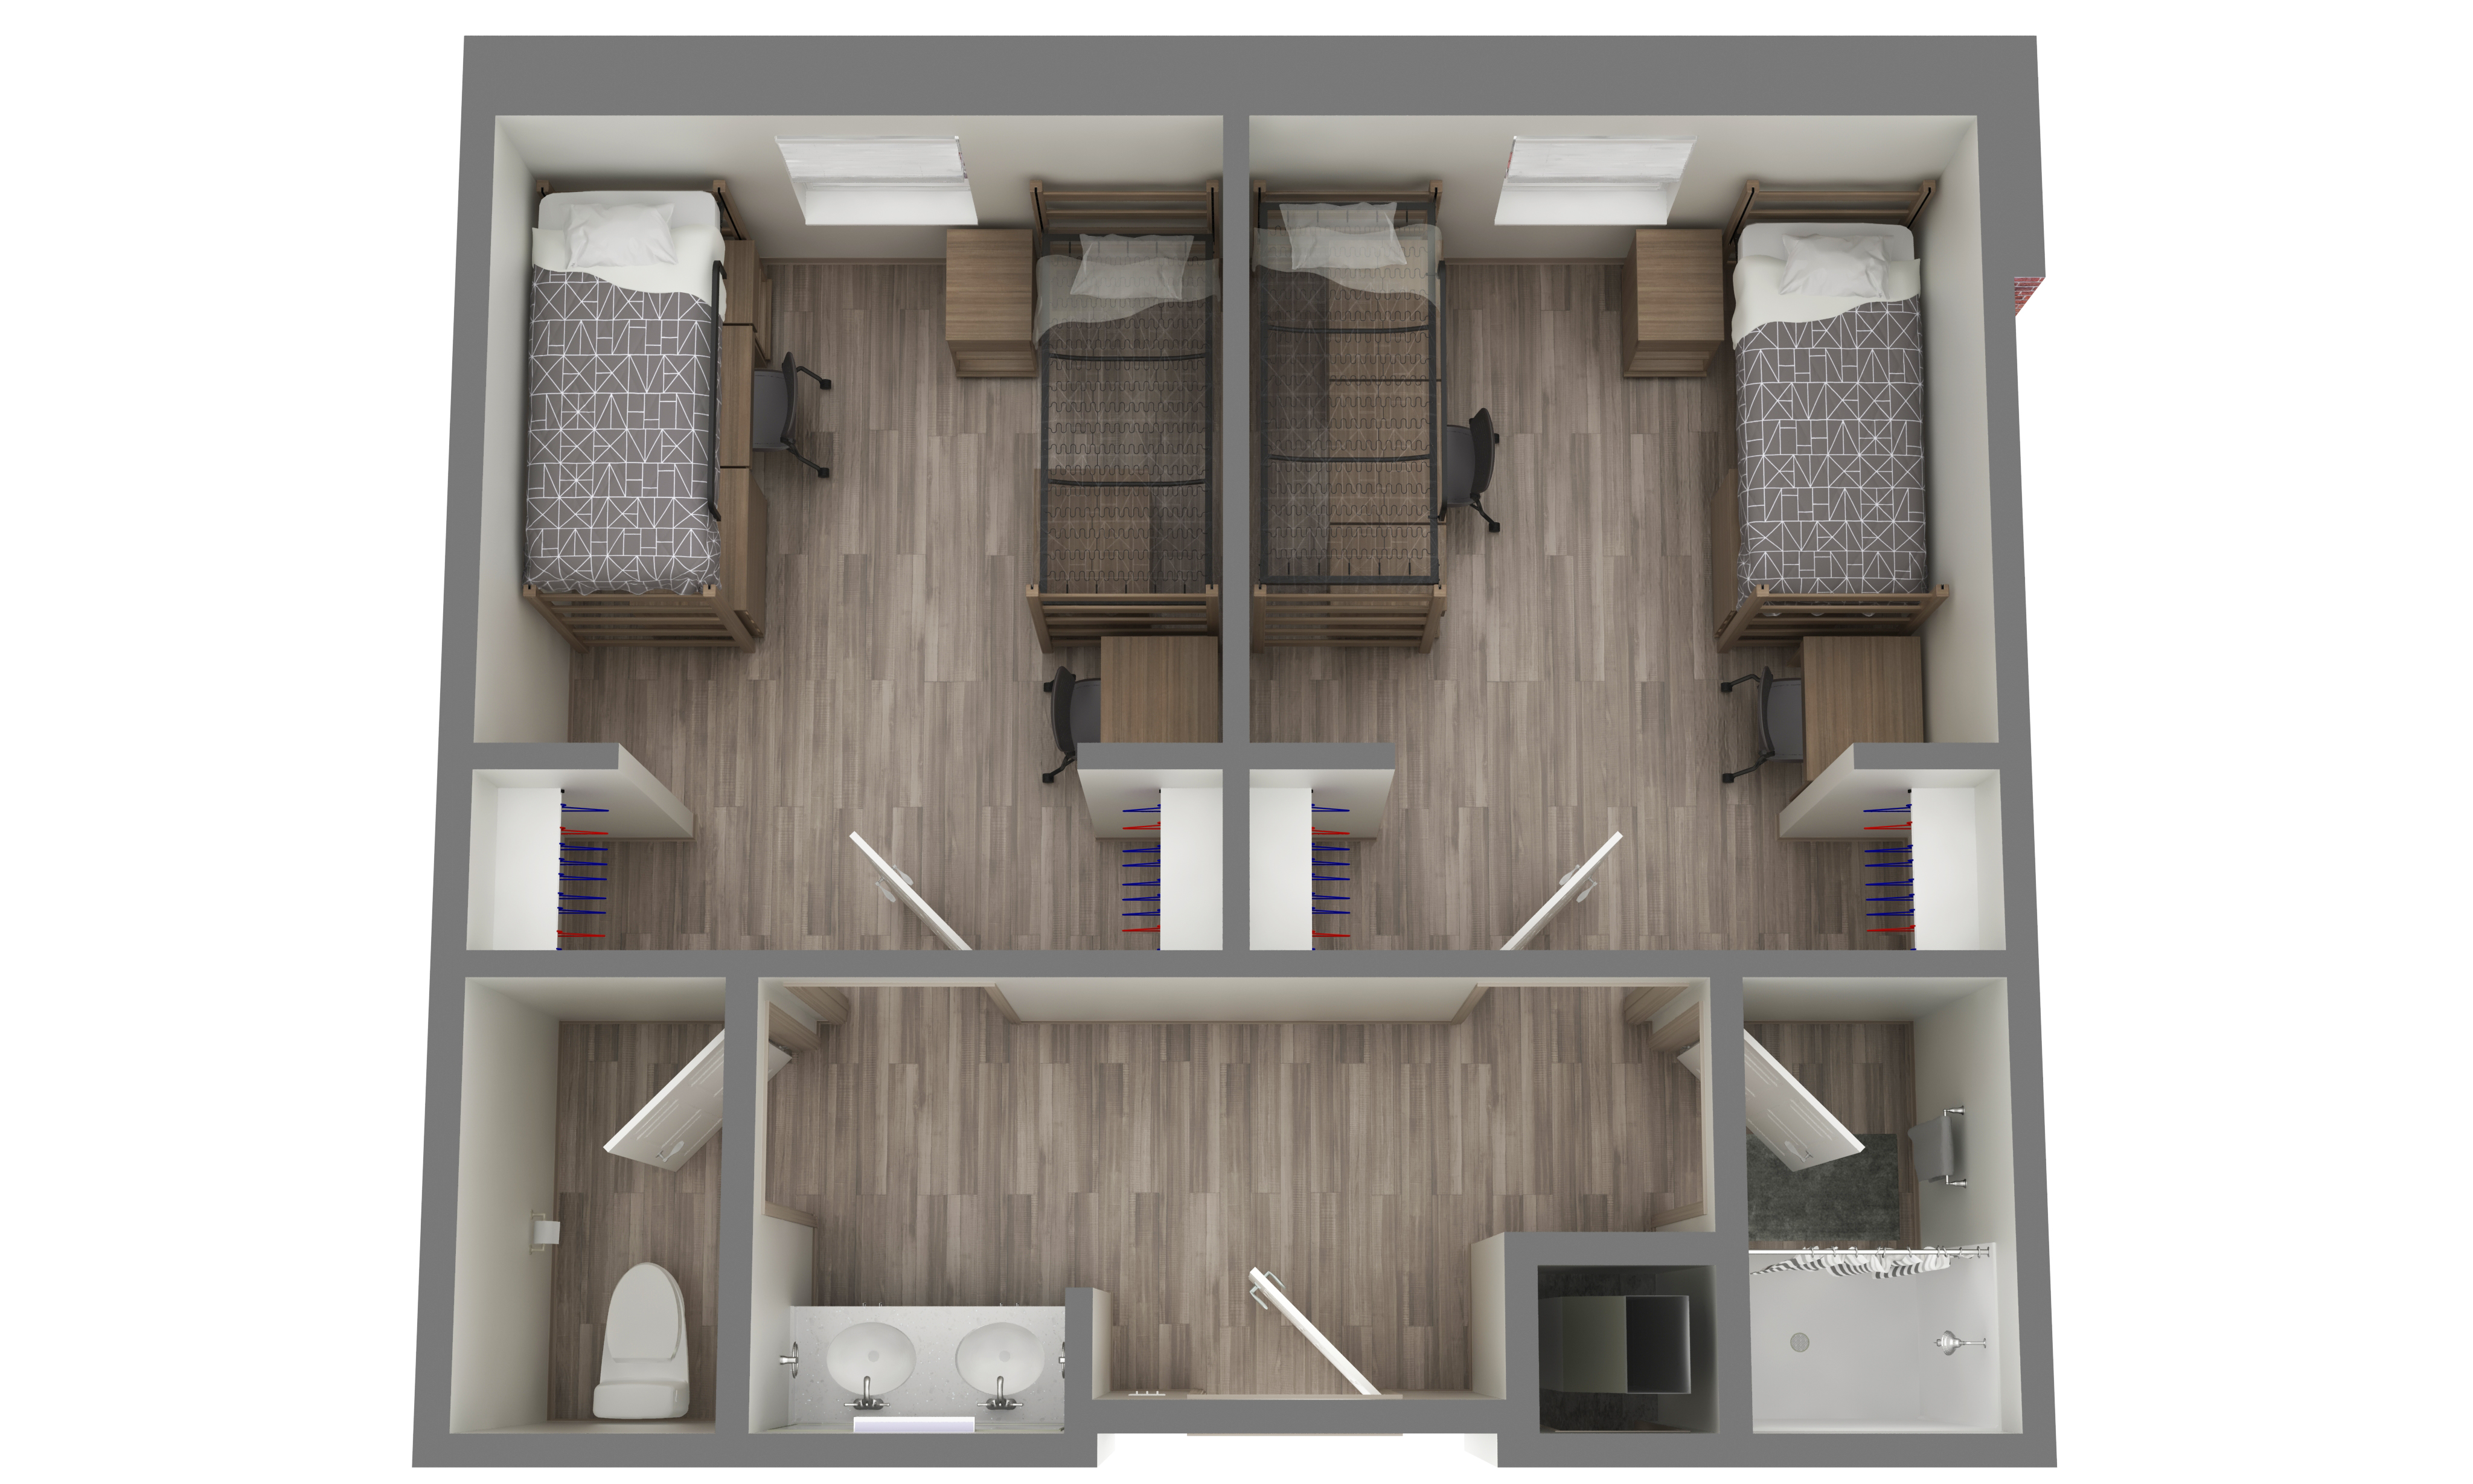 USF's St. Pete housing apartment floor plans.